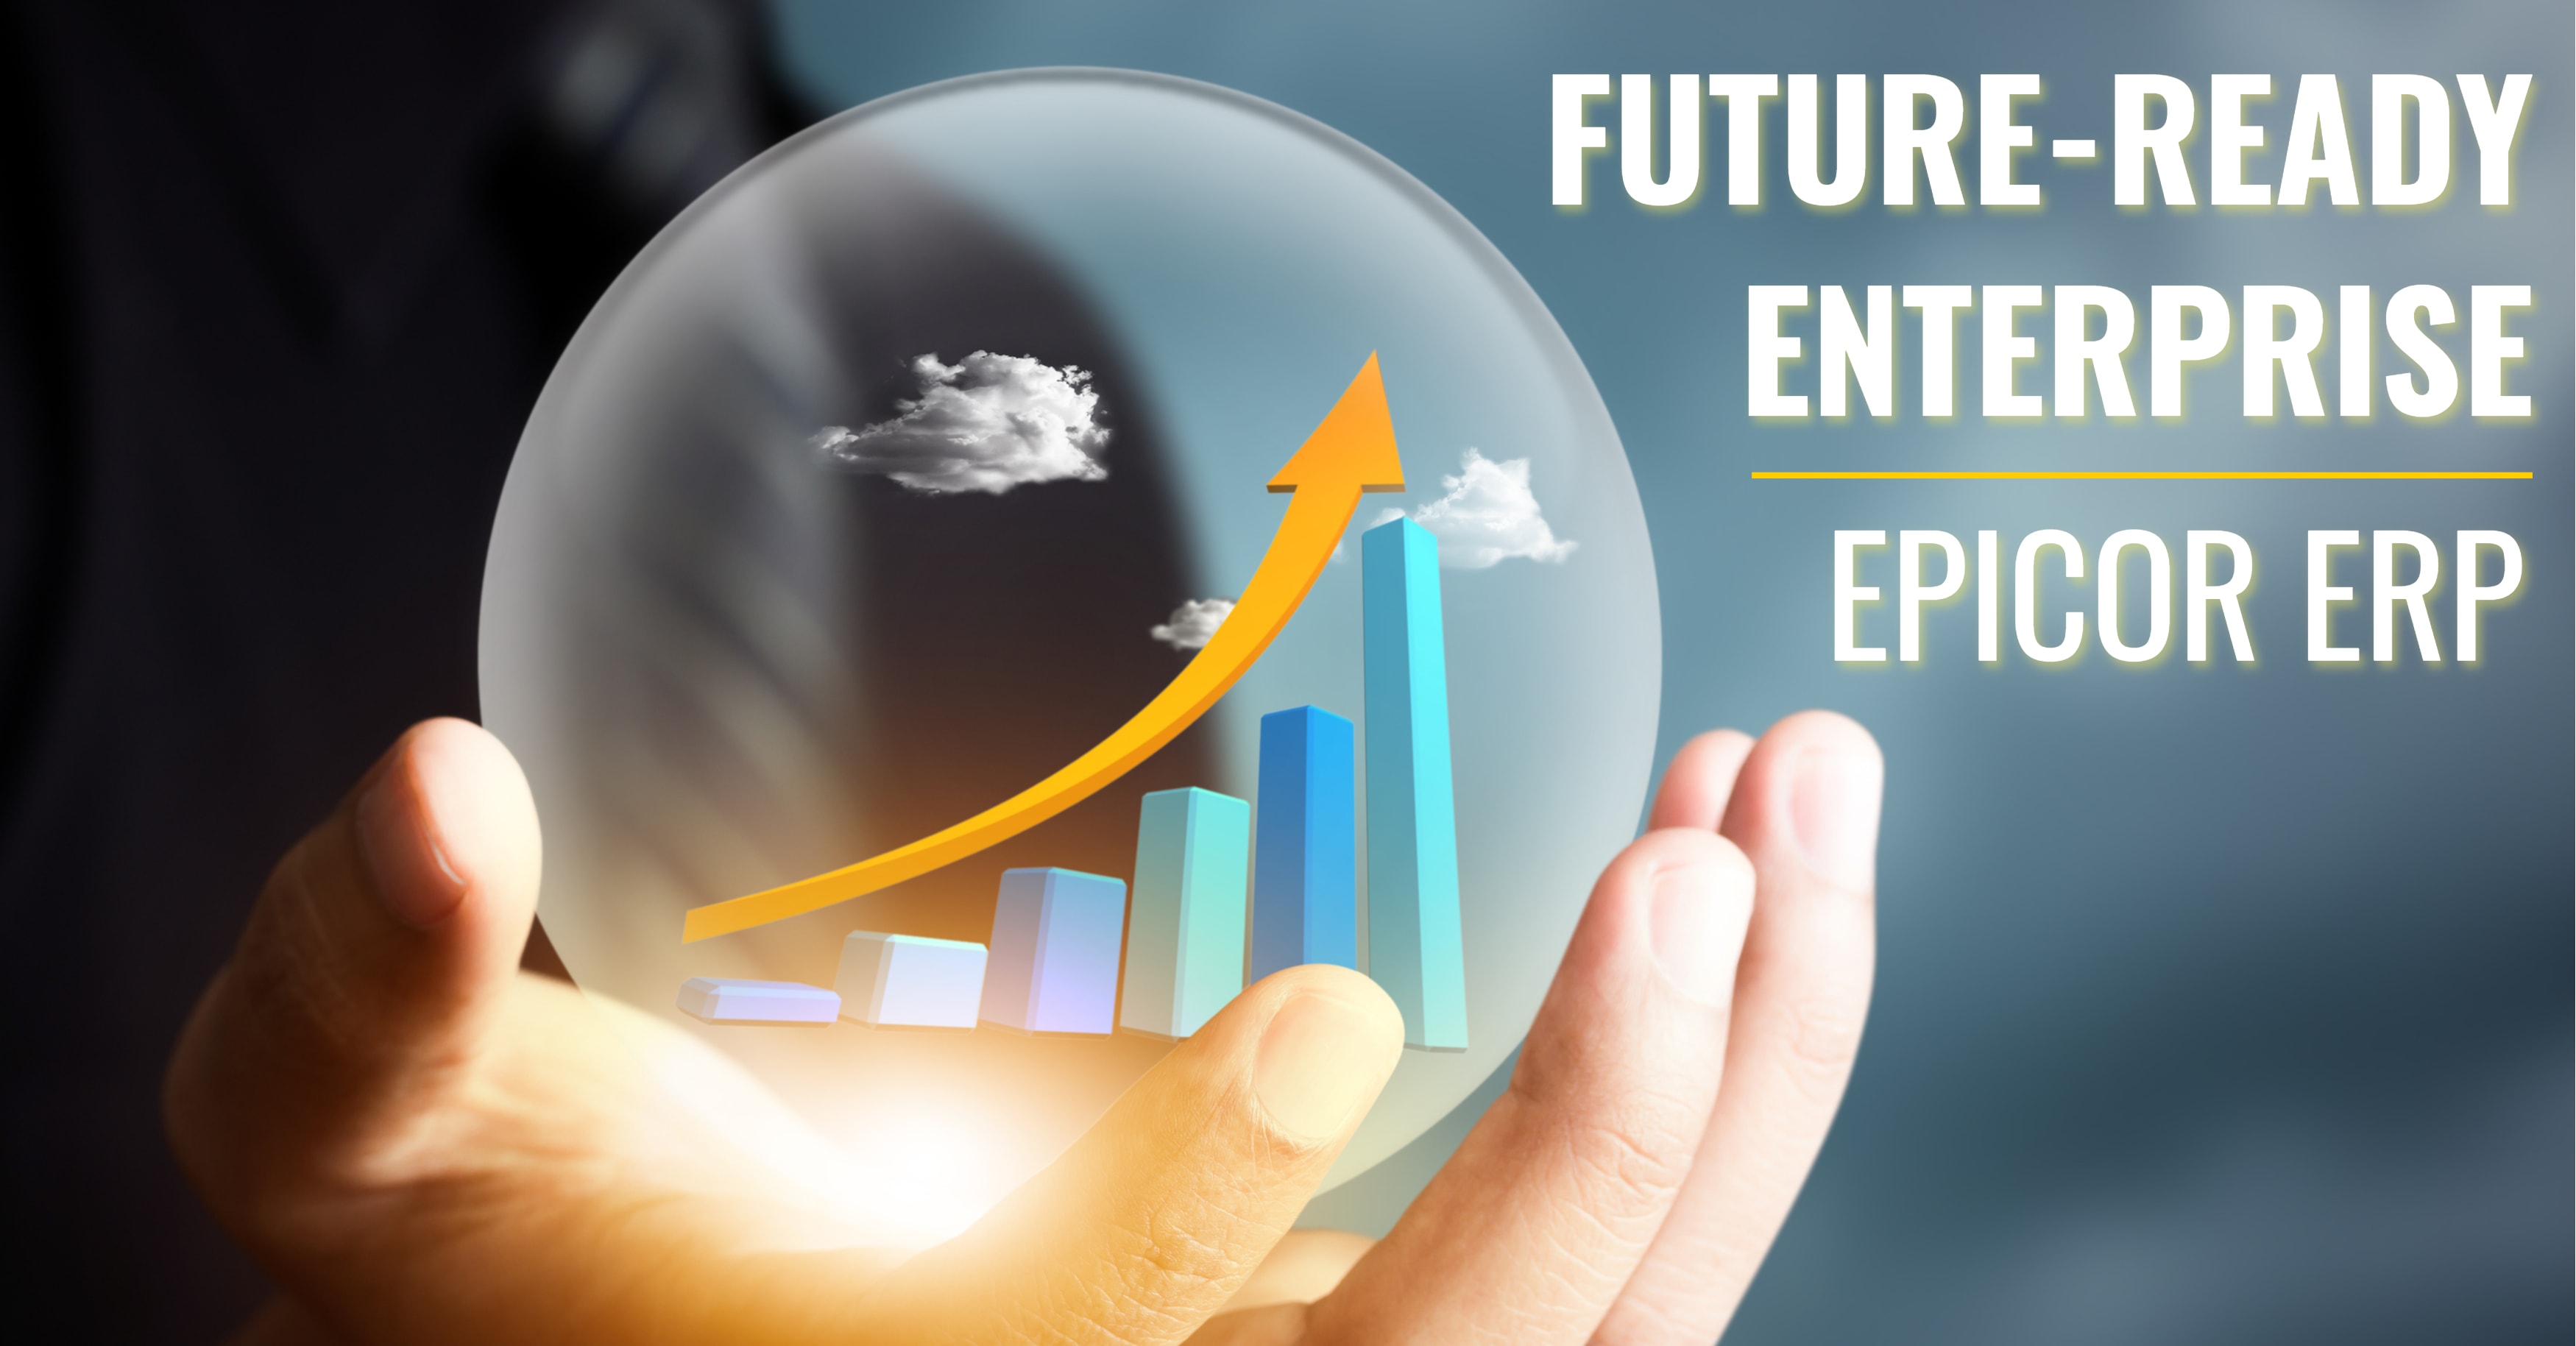 Epicor ERP Future